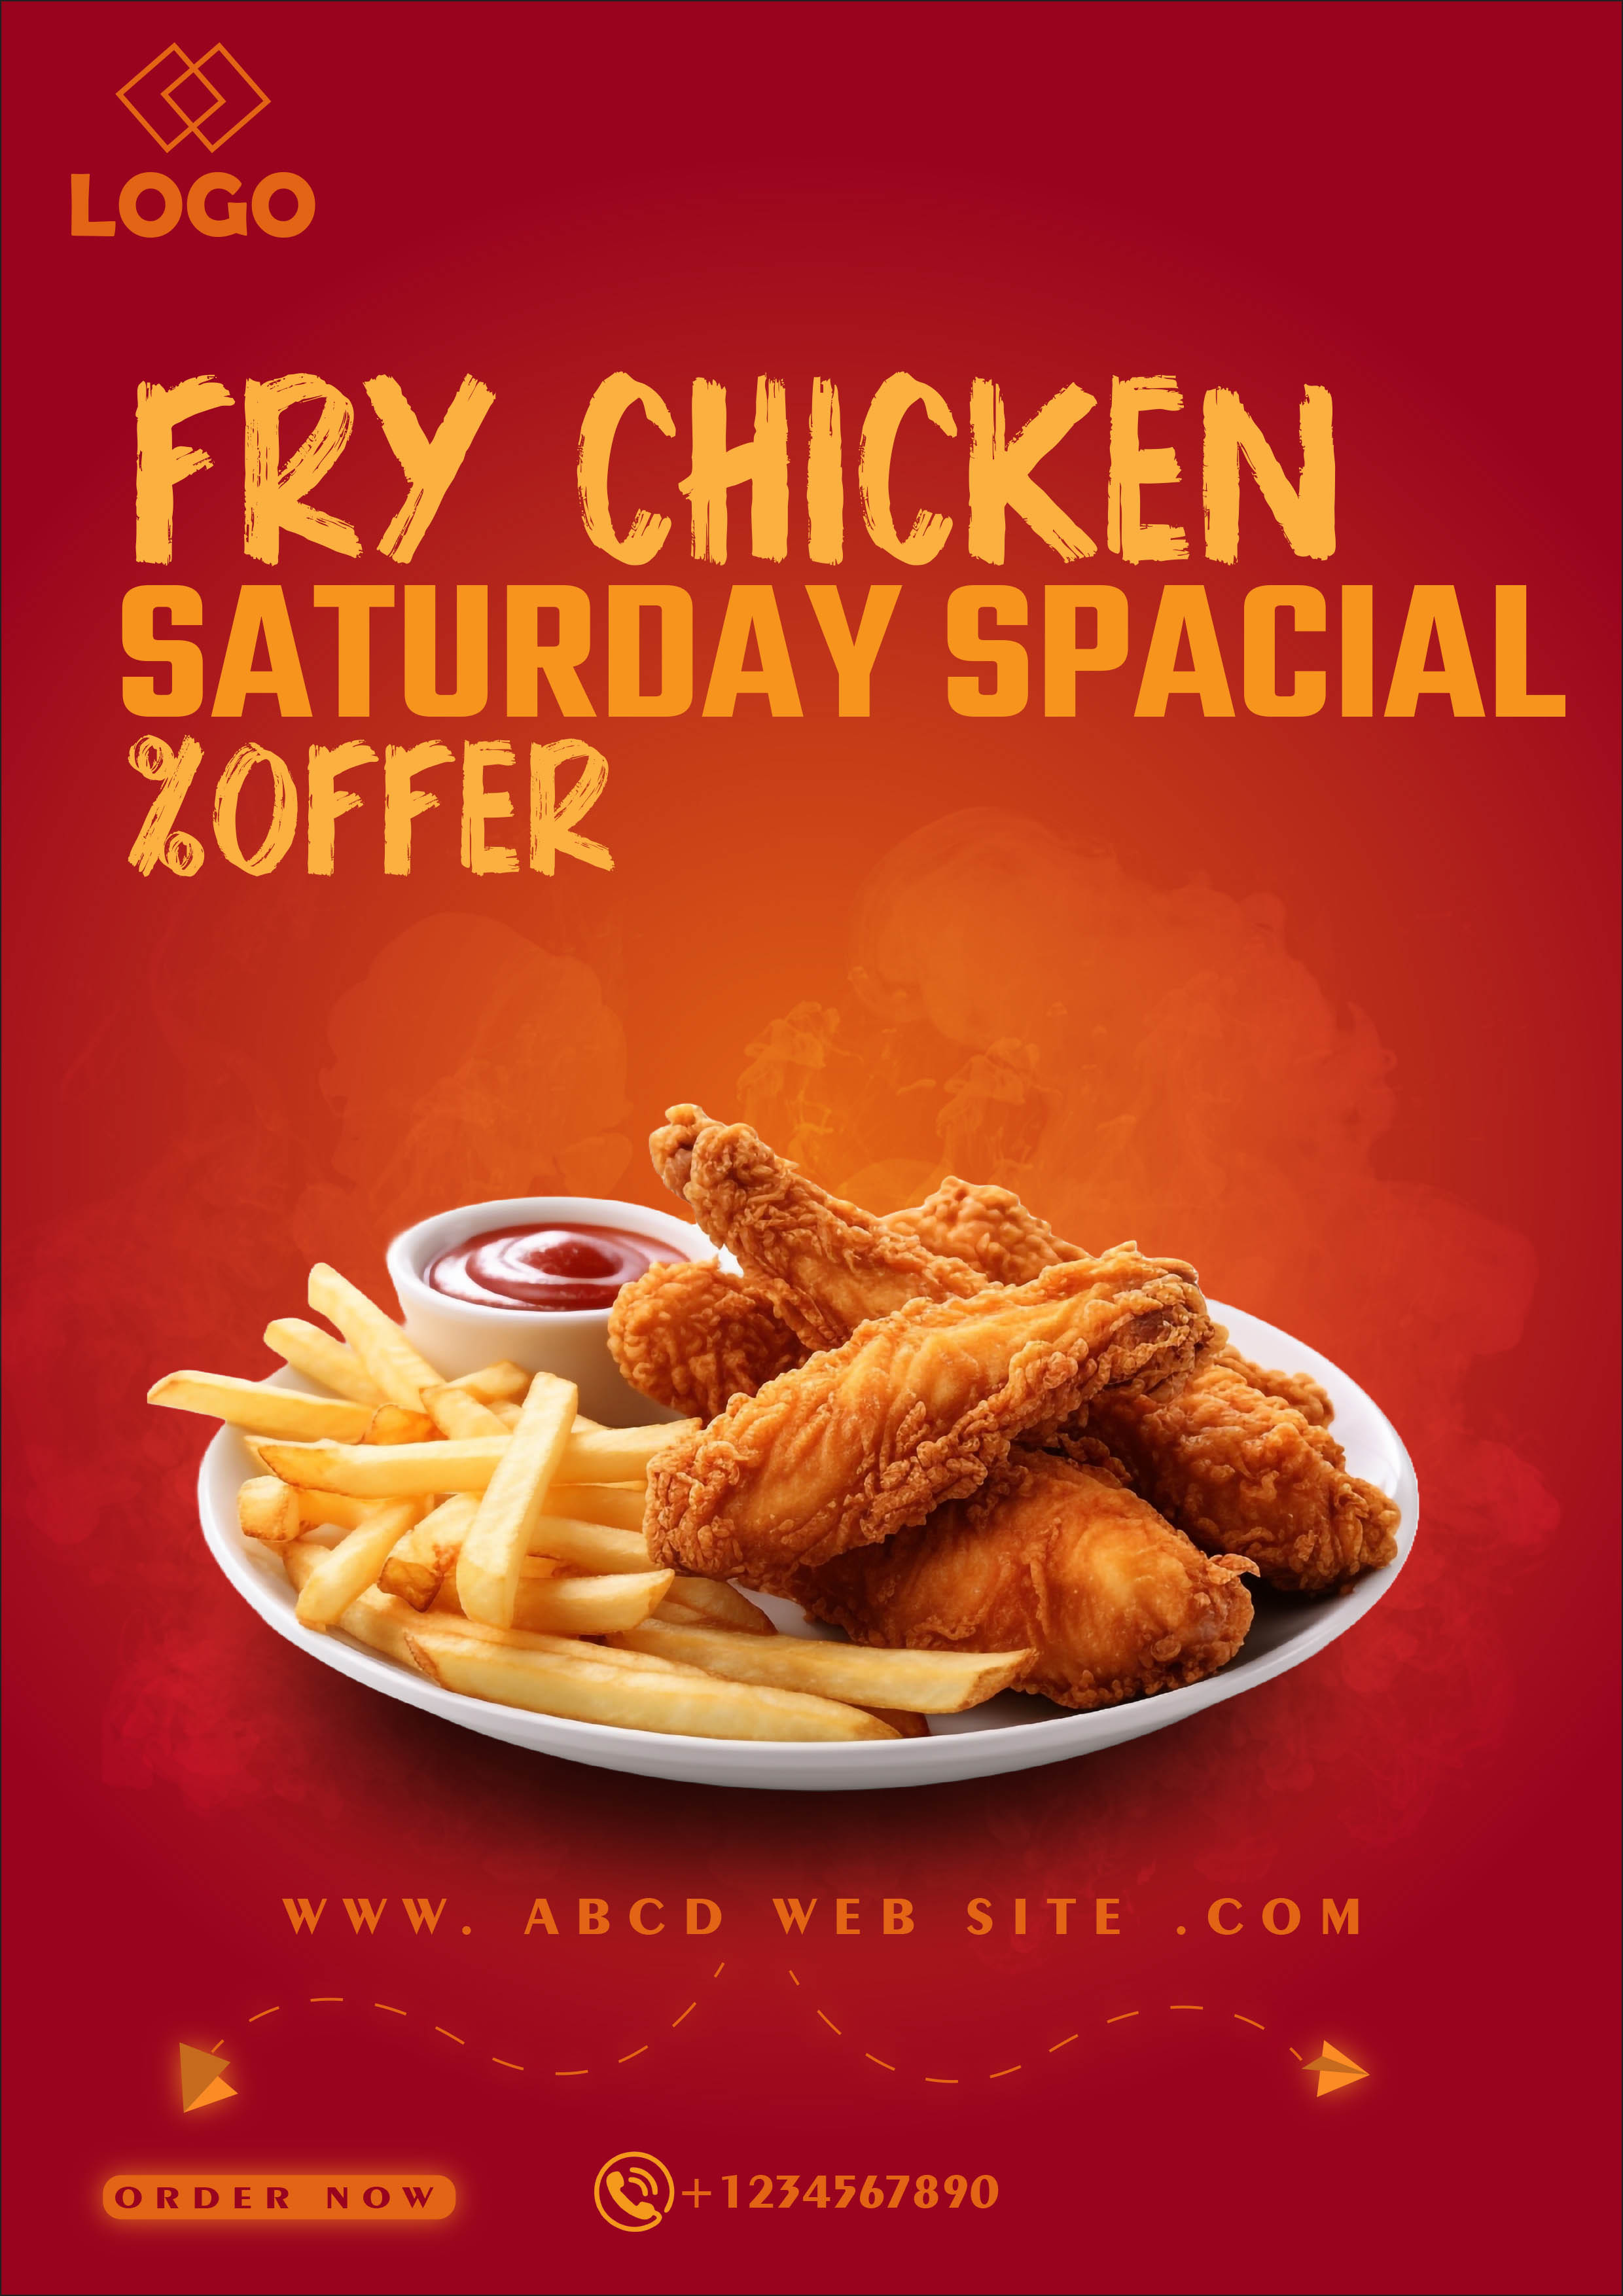 chicken fry advertisment copy 910